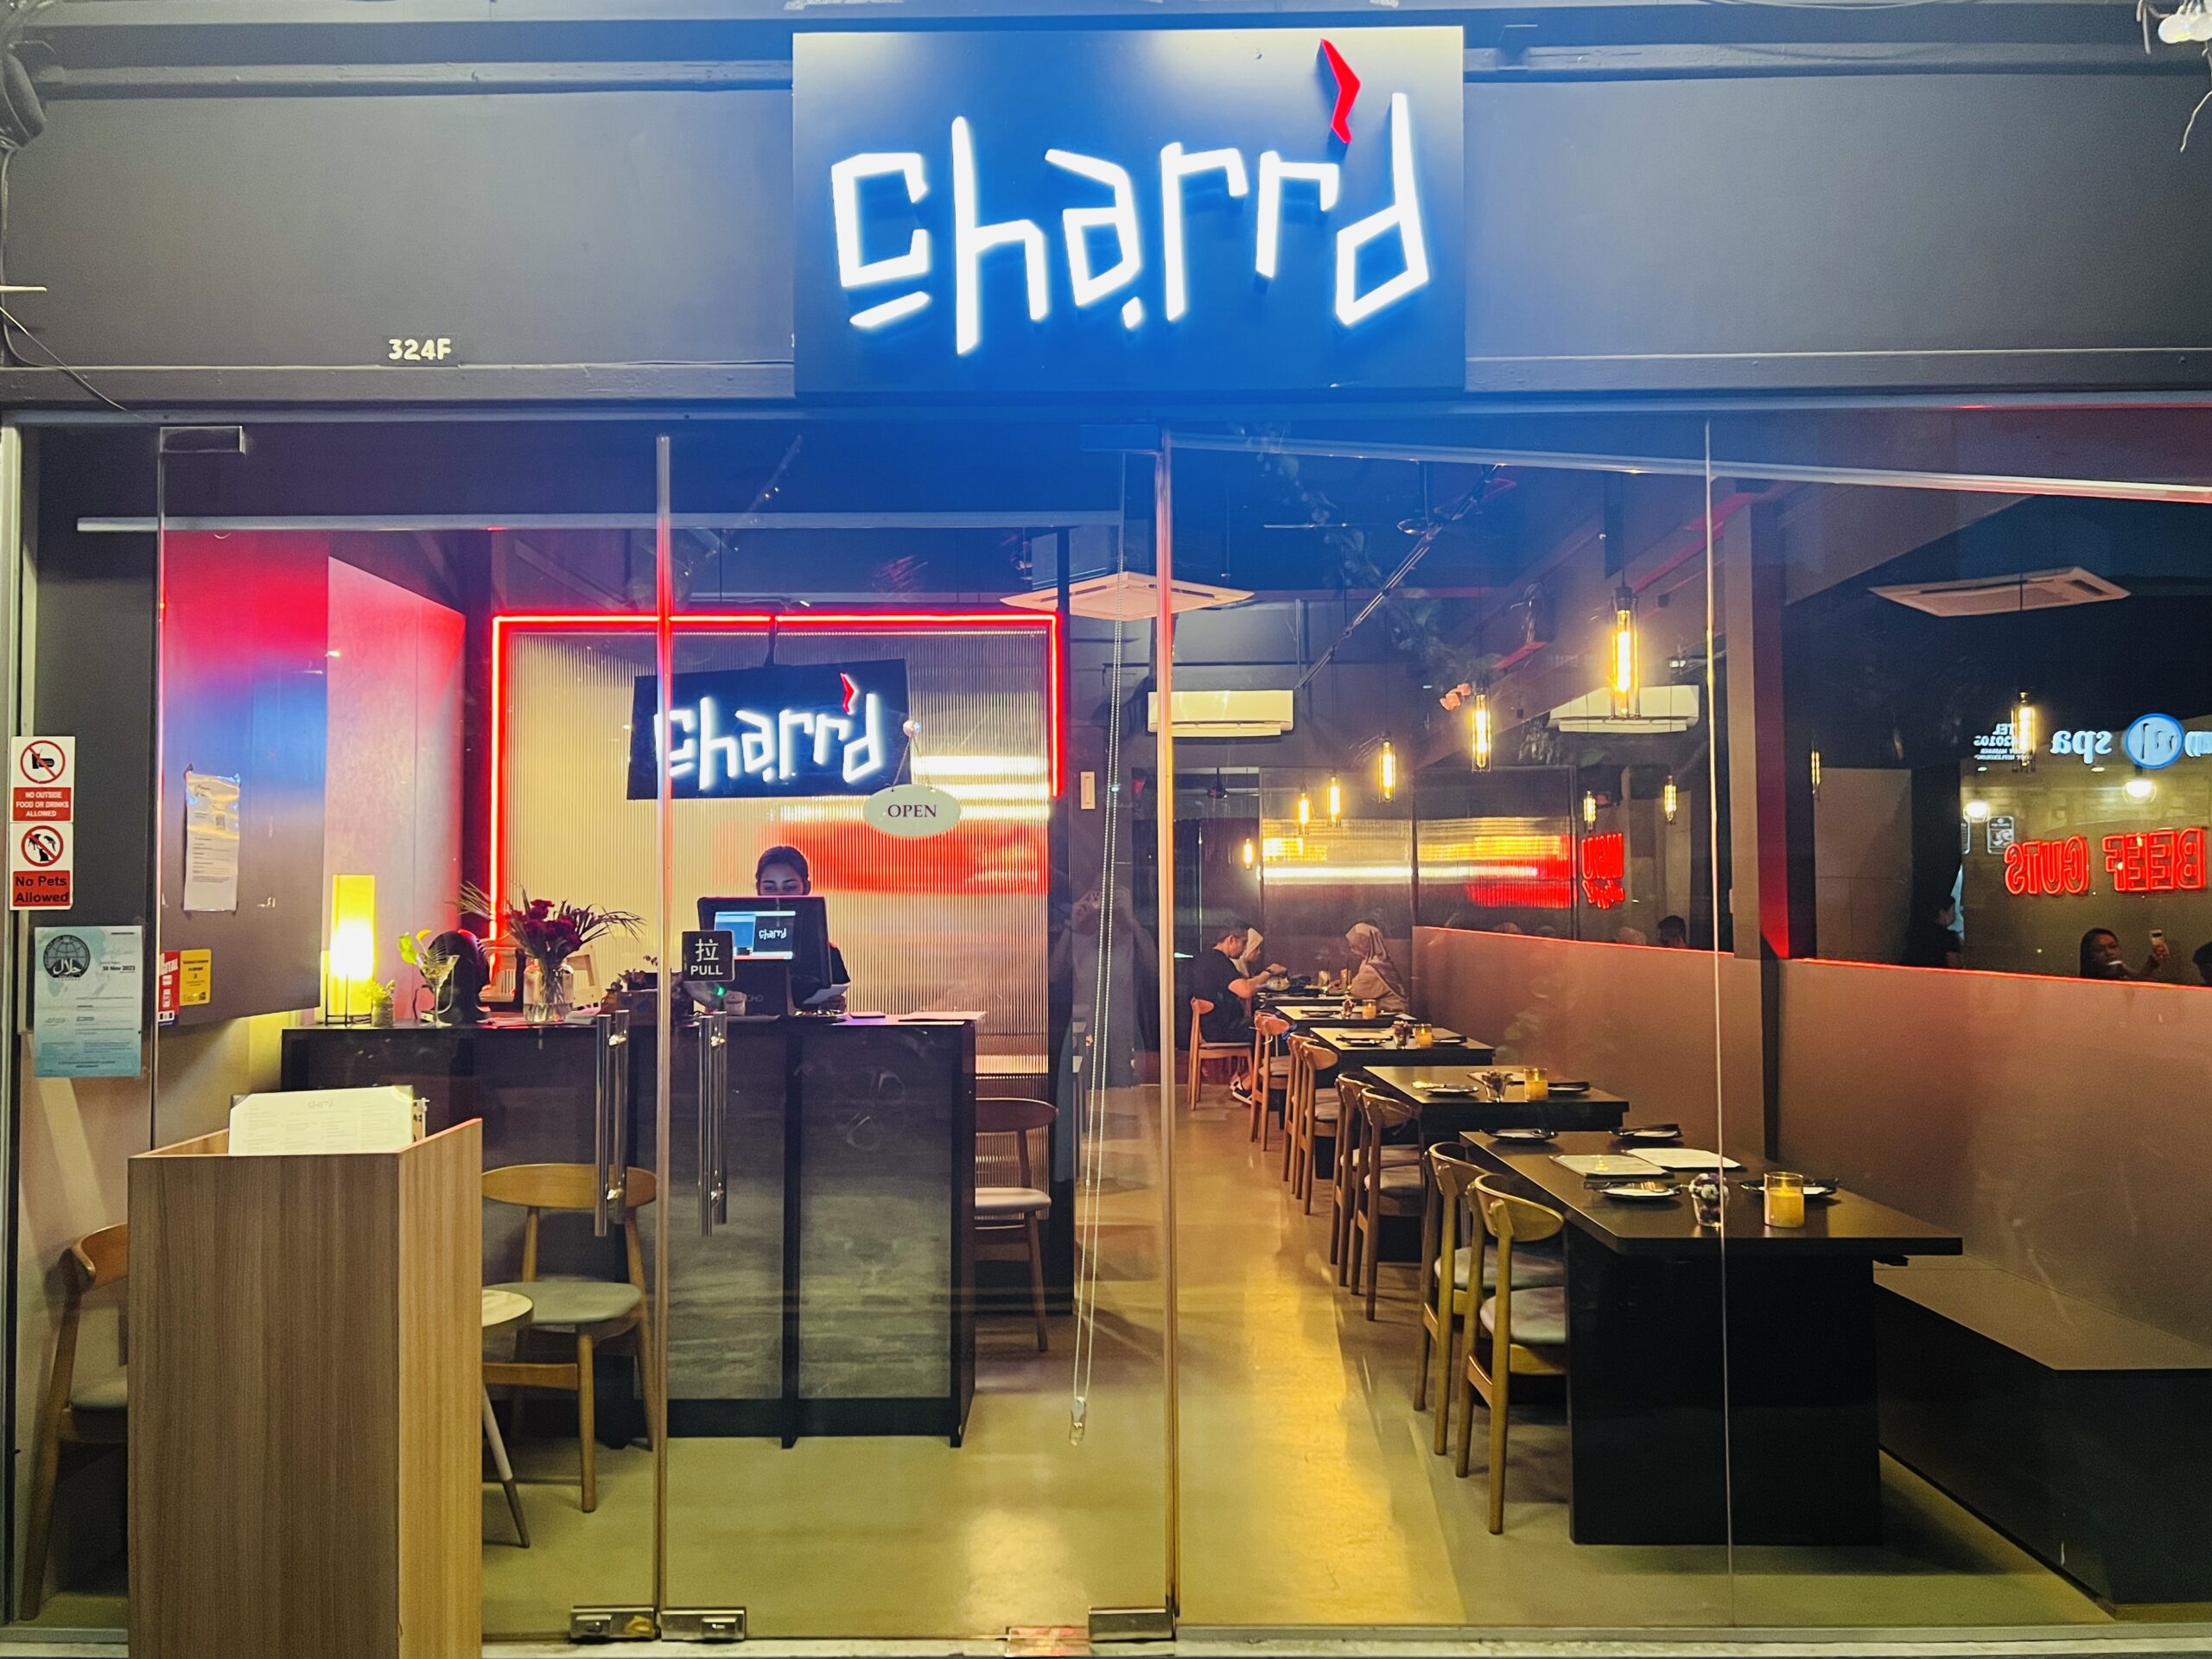 Charr'd - Restaurant Front